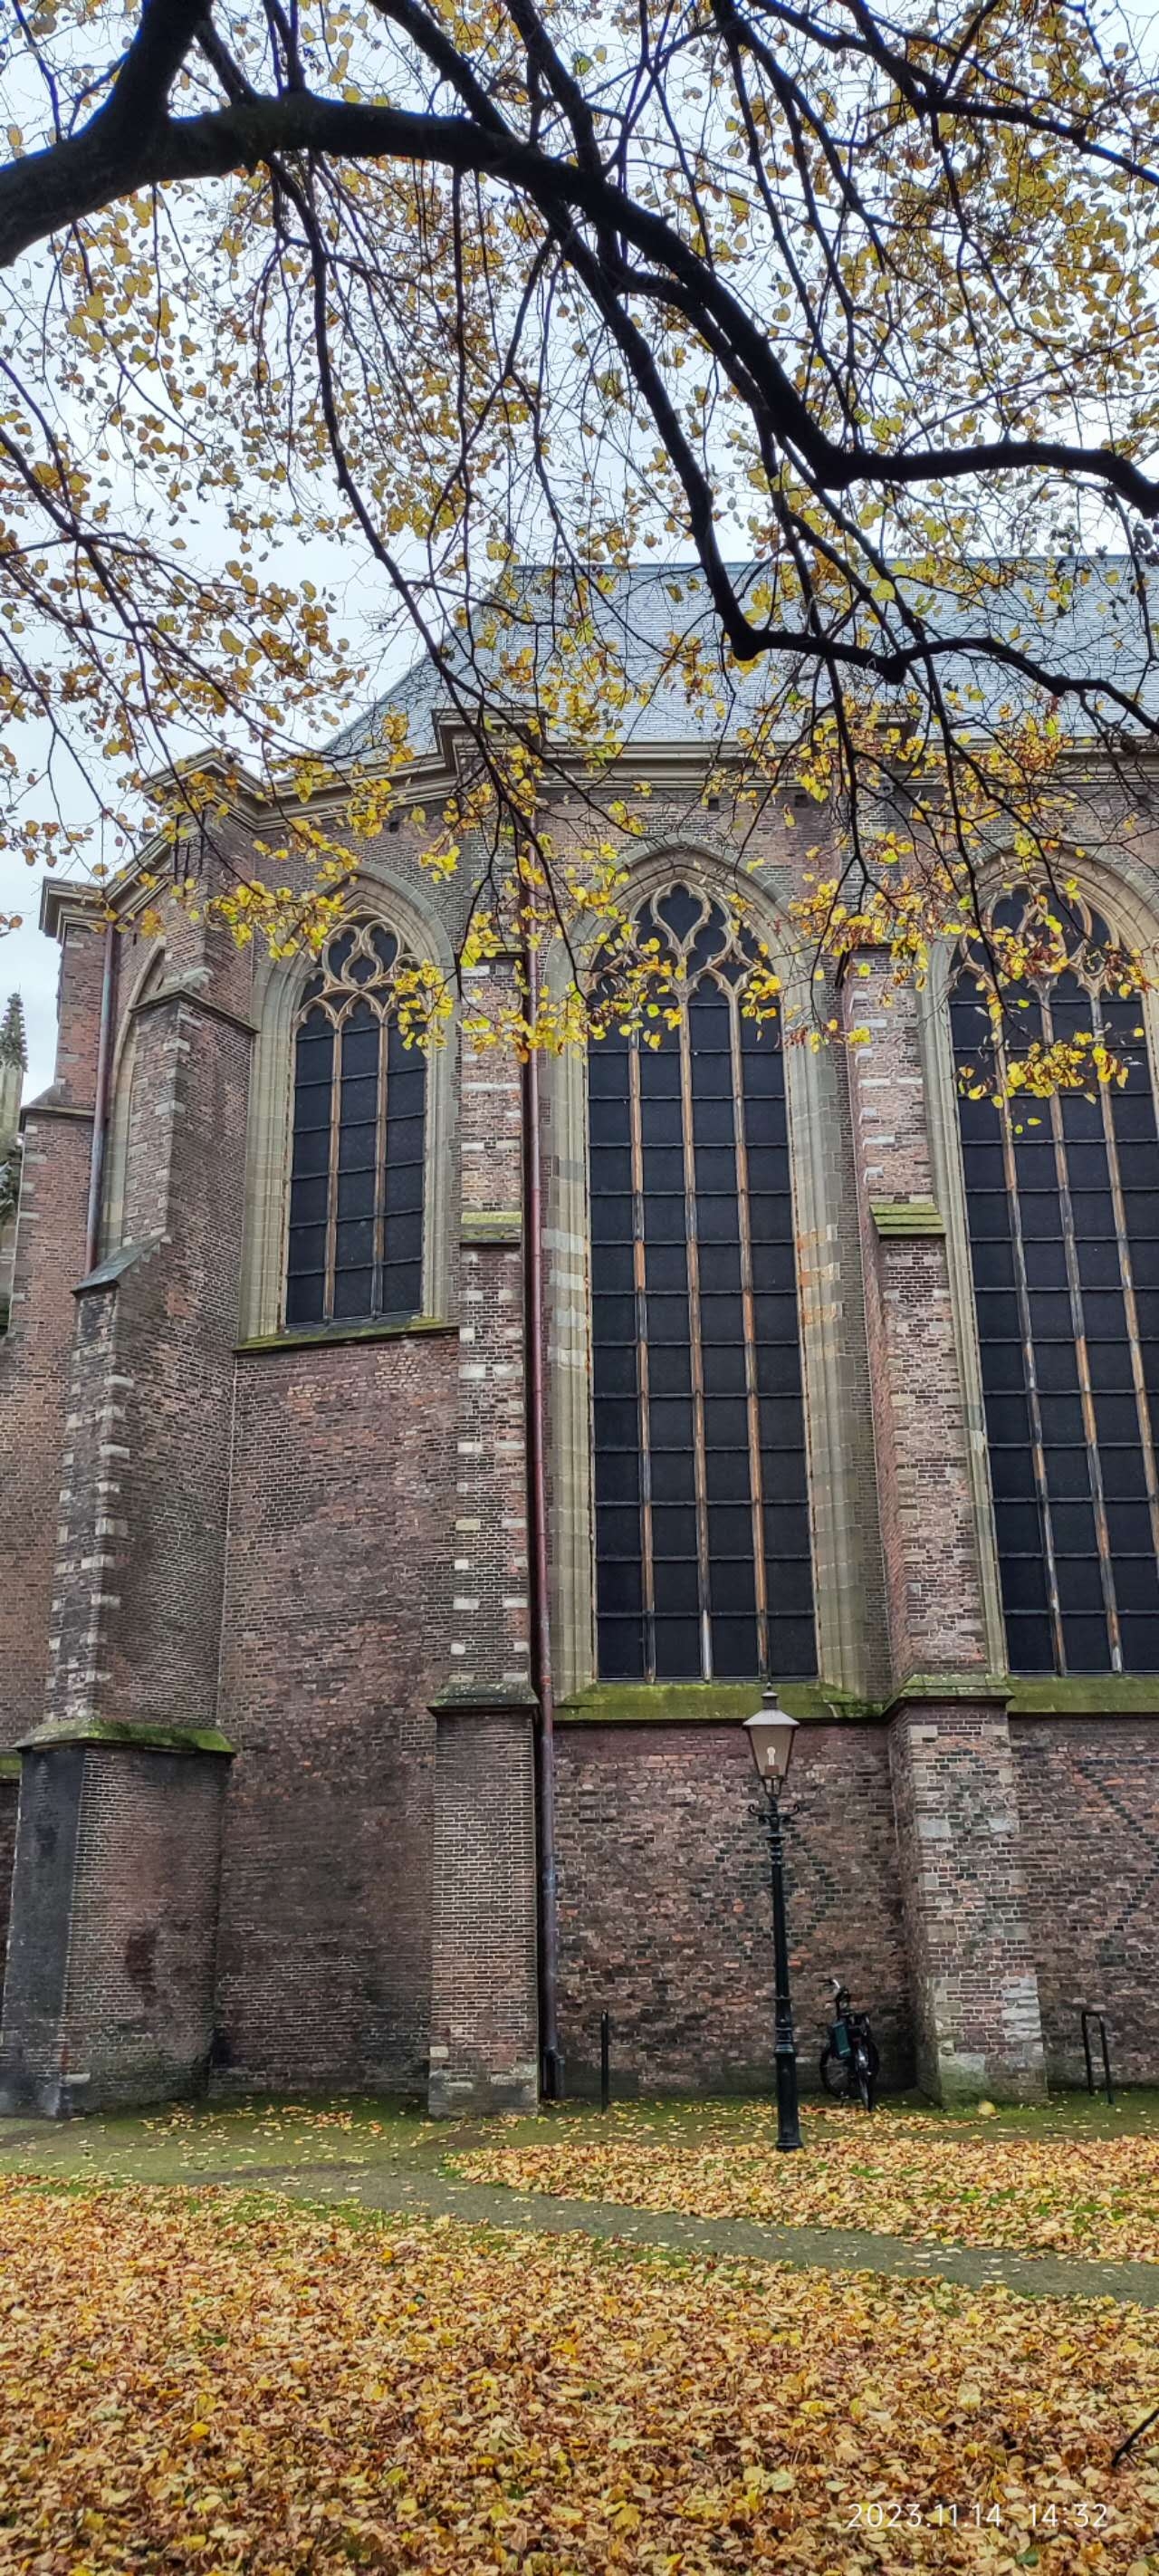 Grote kerk，一个位于多德雷赫特的大教堂，在秋天落叶的衬托下倍感沧桑。